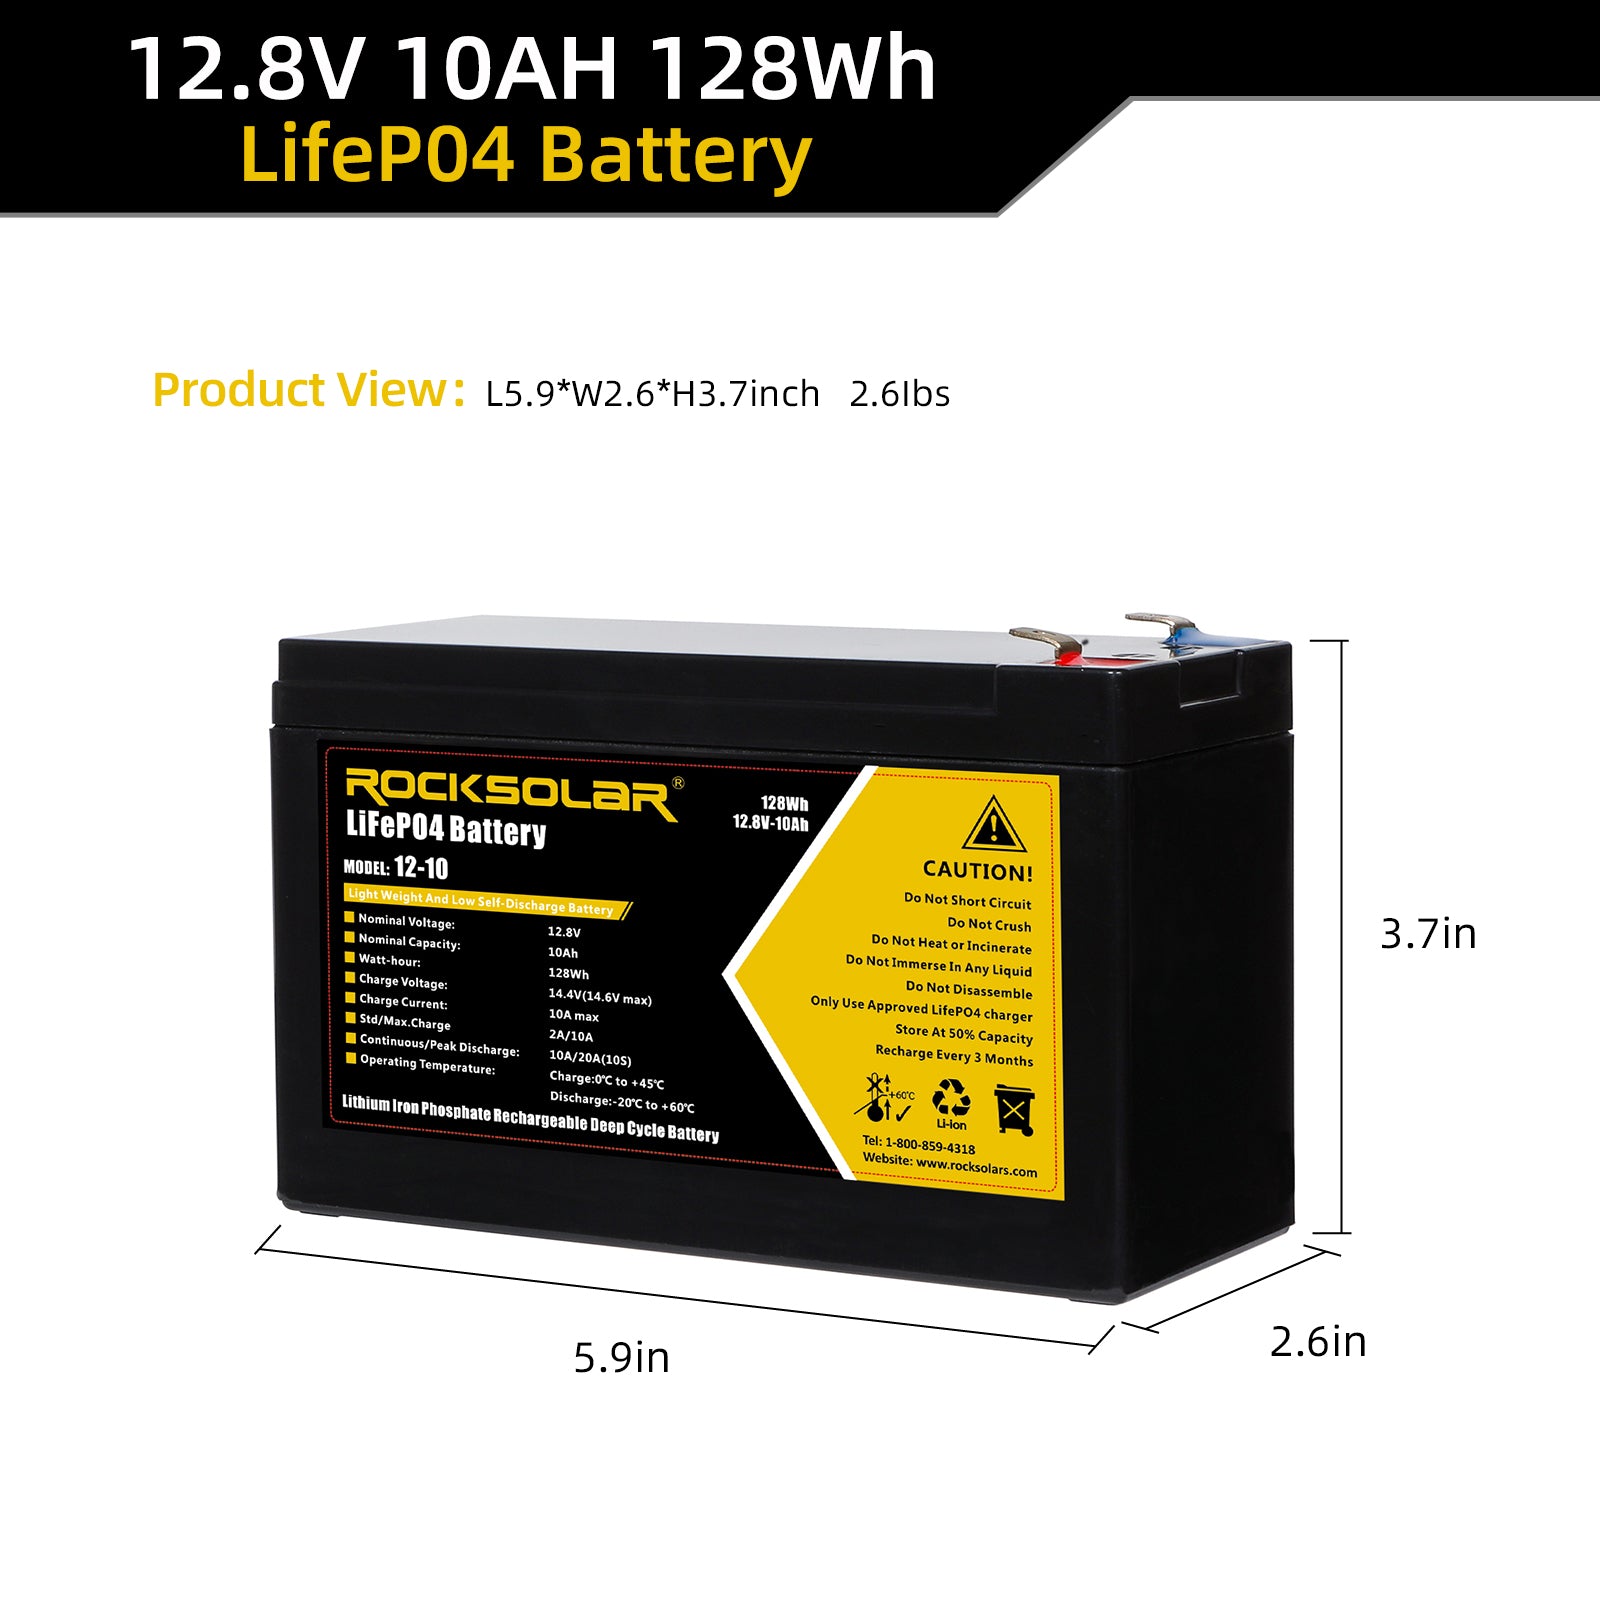 Batterie 12V 10AH LiFePO4 Grade A, cycle profond BMS plus de 10000